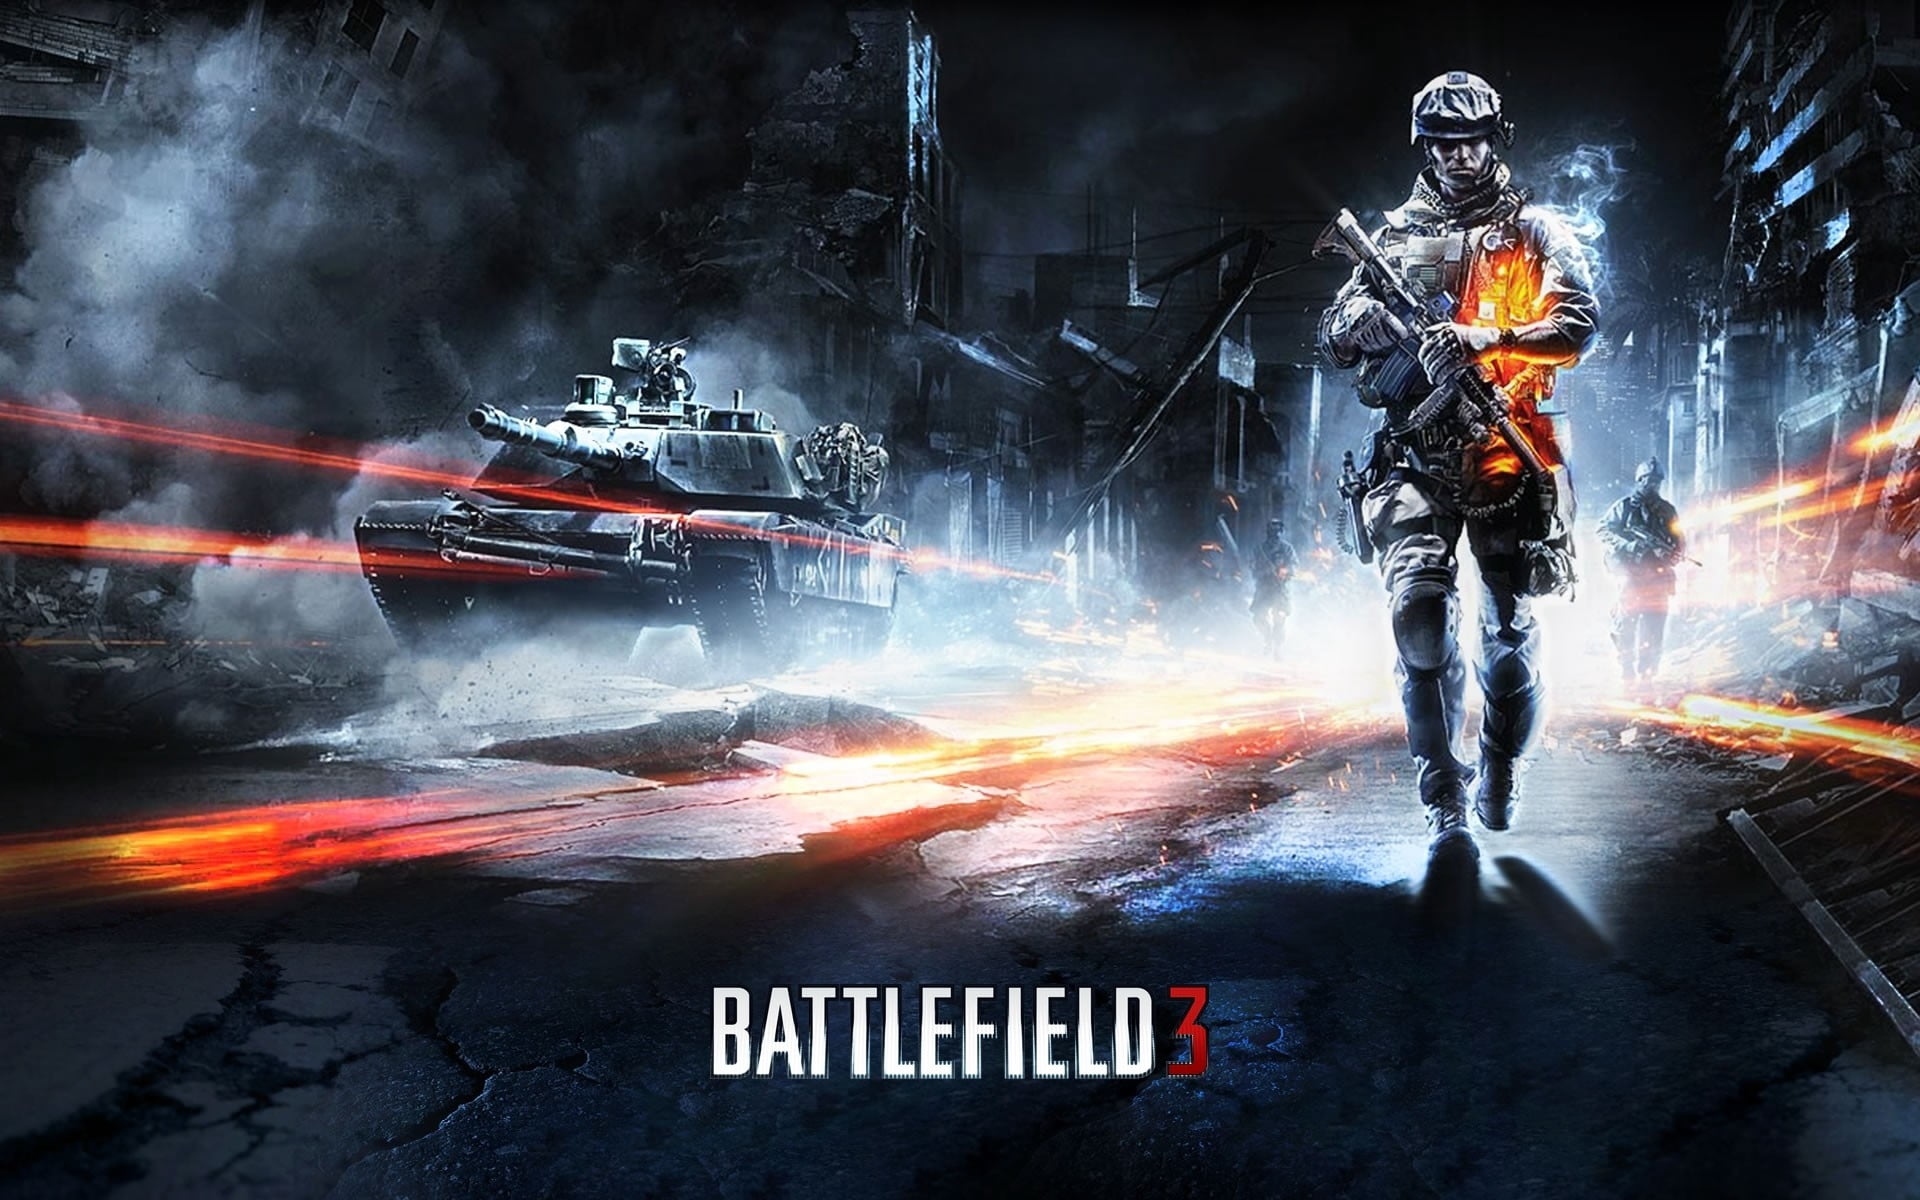 Battlefield 3 poster, tank, city, road, fire - Natural Phenomenon